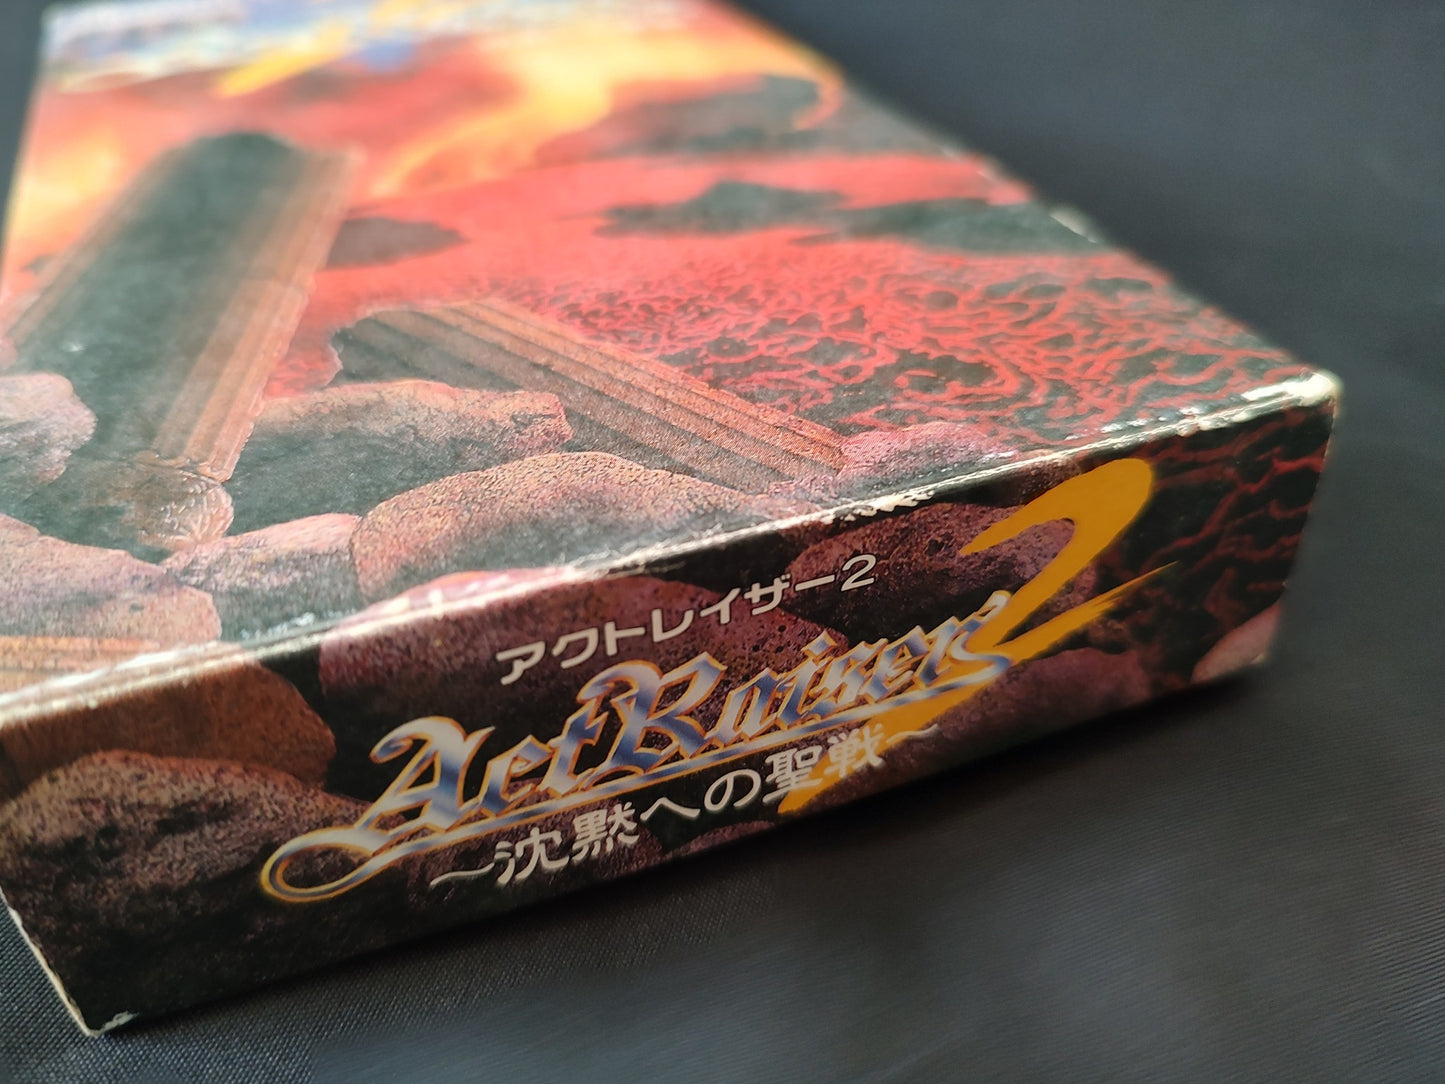 ActRaiser 2 Super Famicom SNES Cartridge,Manual Boxed set tested -g0125-